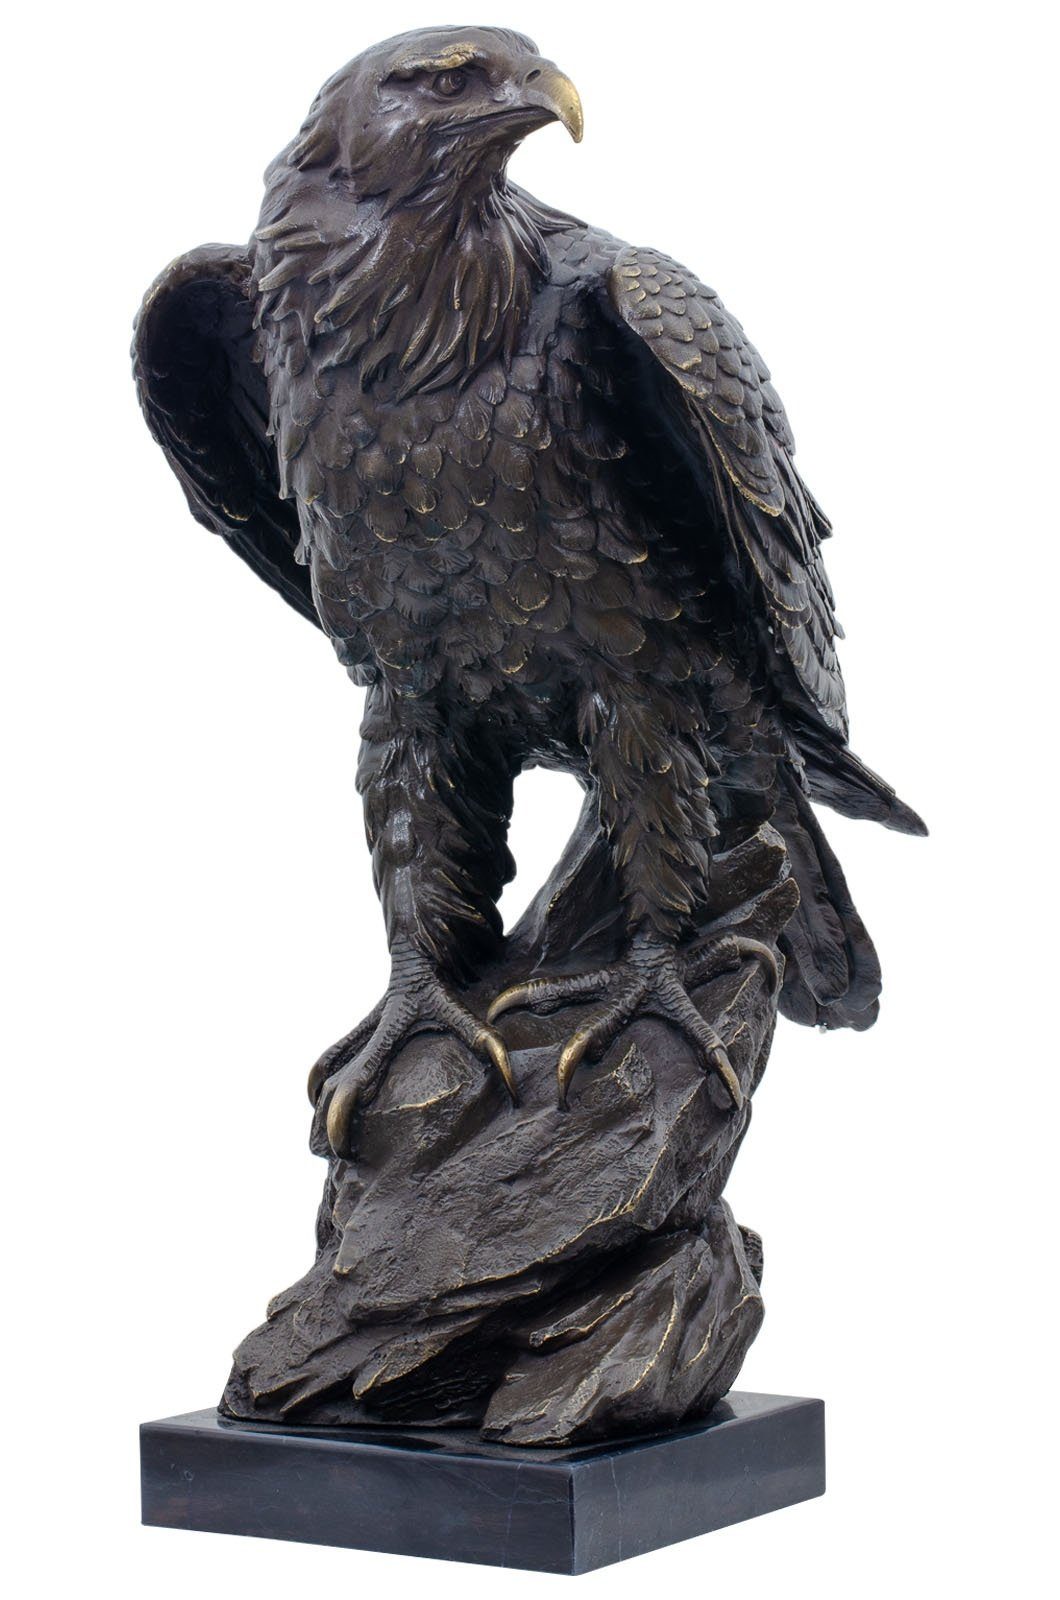 Aubaho Skulptur Bronzeskulptur Adler im Antik-Stil Bronze Figur Statue 51cm